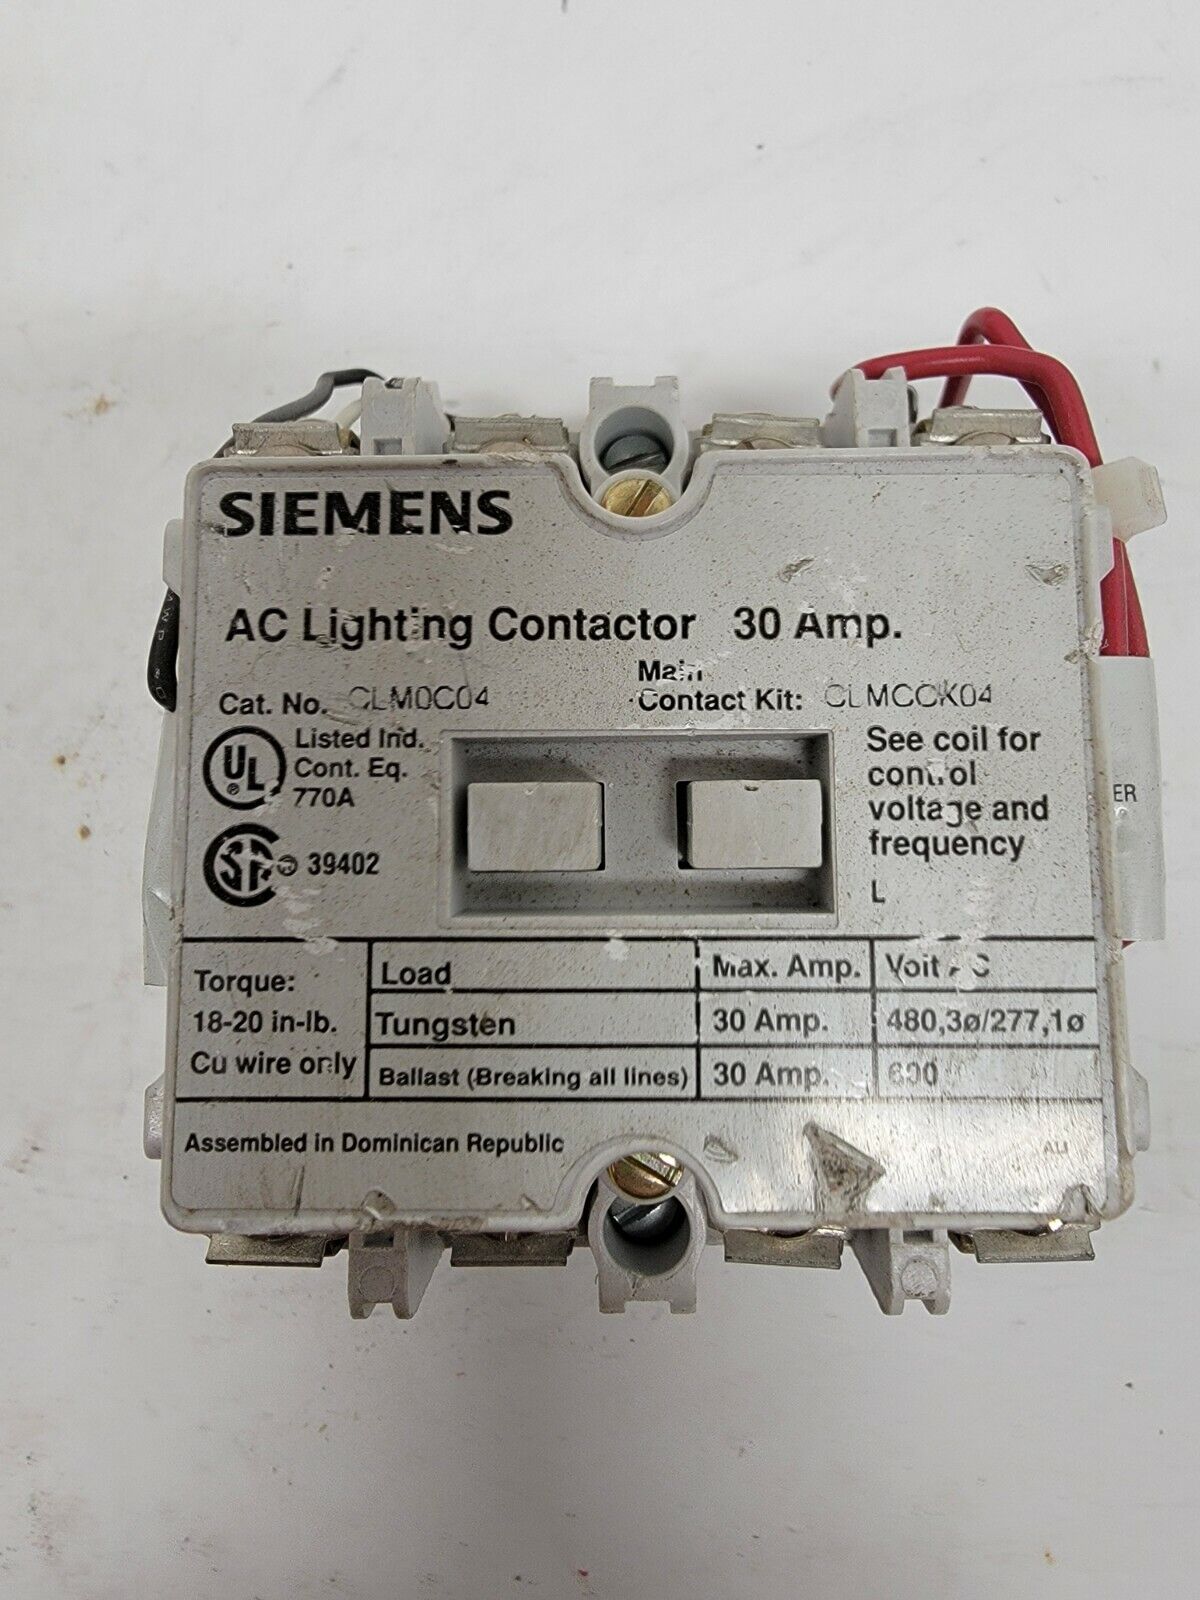 Siemens Clm0c04 30 Amp Ac Lighting Contactor Clmcck04